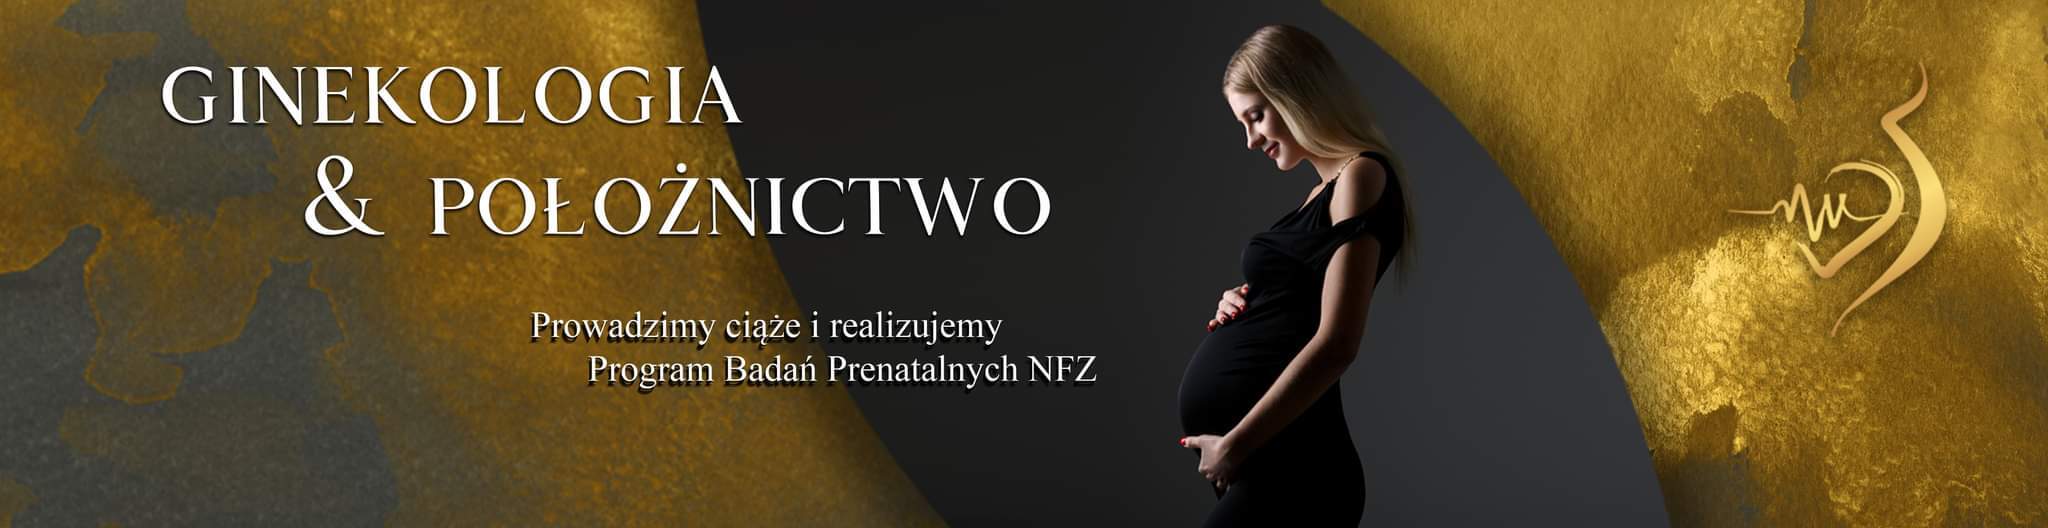 Sonokard - Ginekologia, Badania Prenatalne